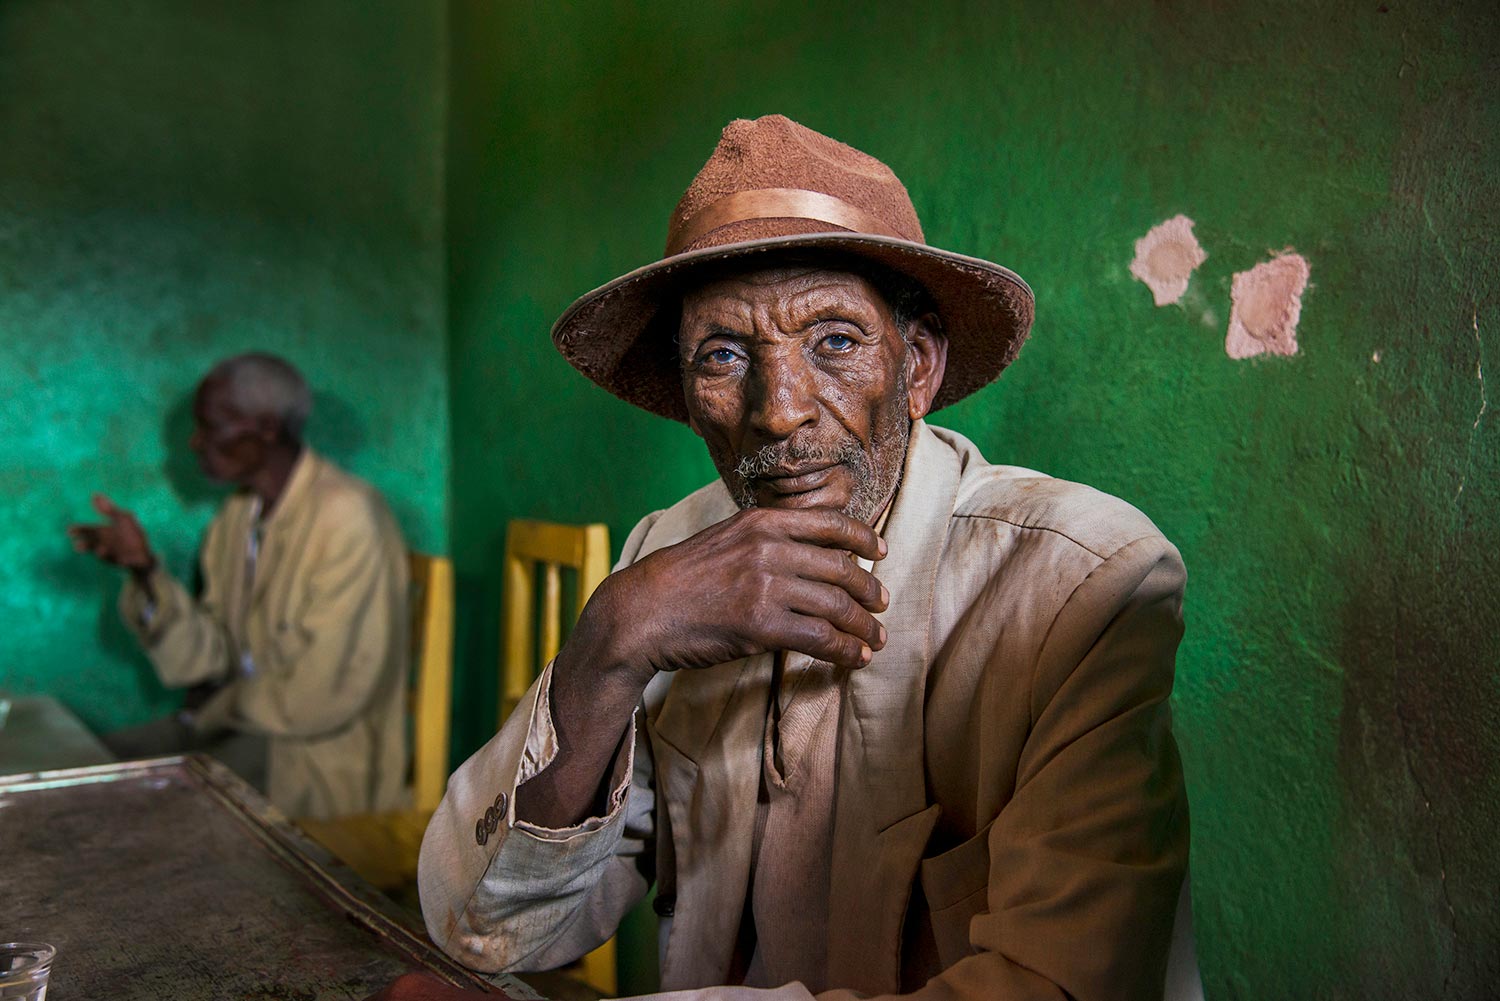 Portrait of an elderly man sitting in a green room, Ethiopia, 2014